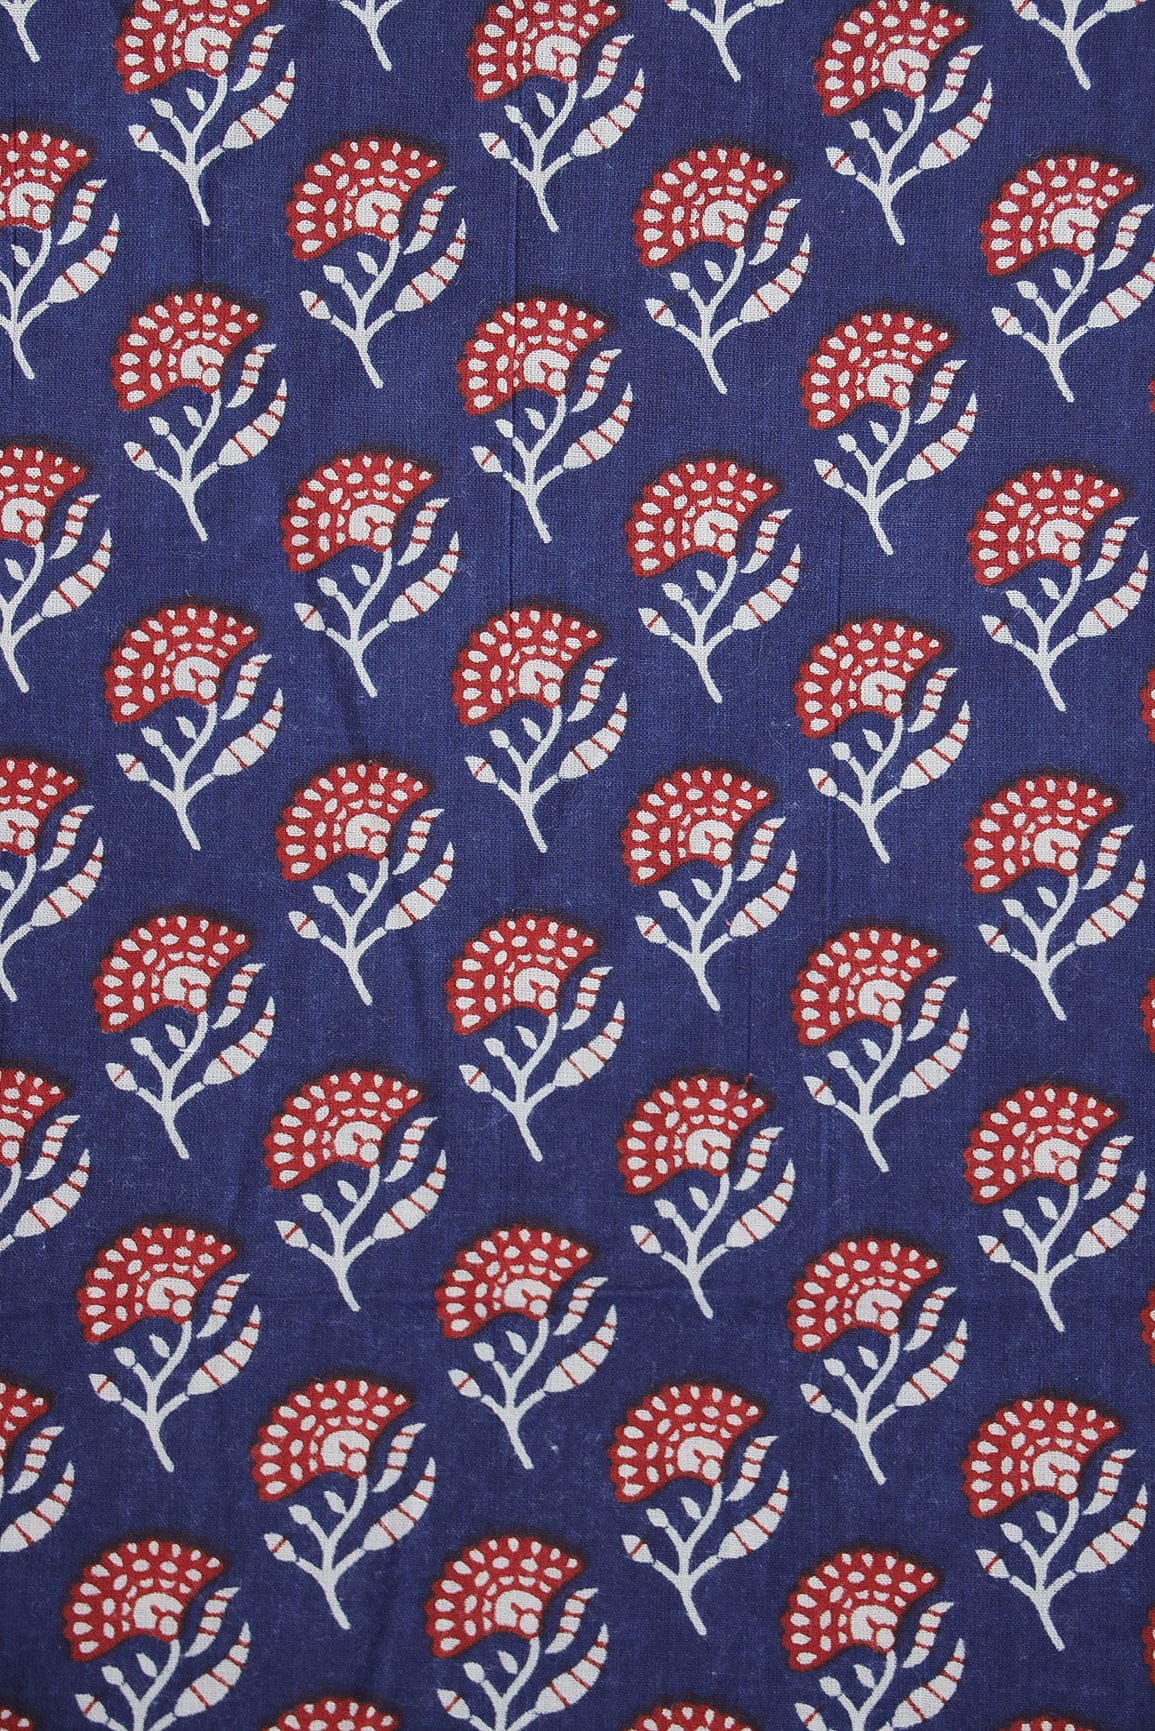 doeraa Prints Red Floral Motif Screen Print on Royal Blue organic Cotton Fabric